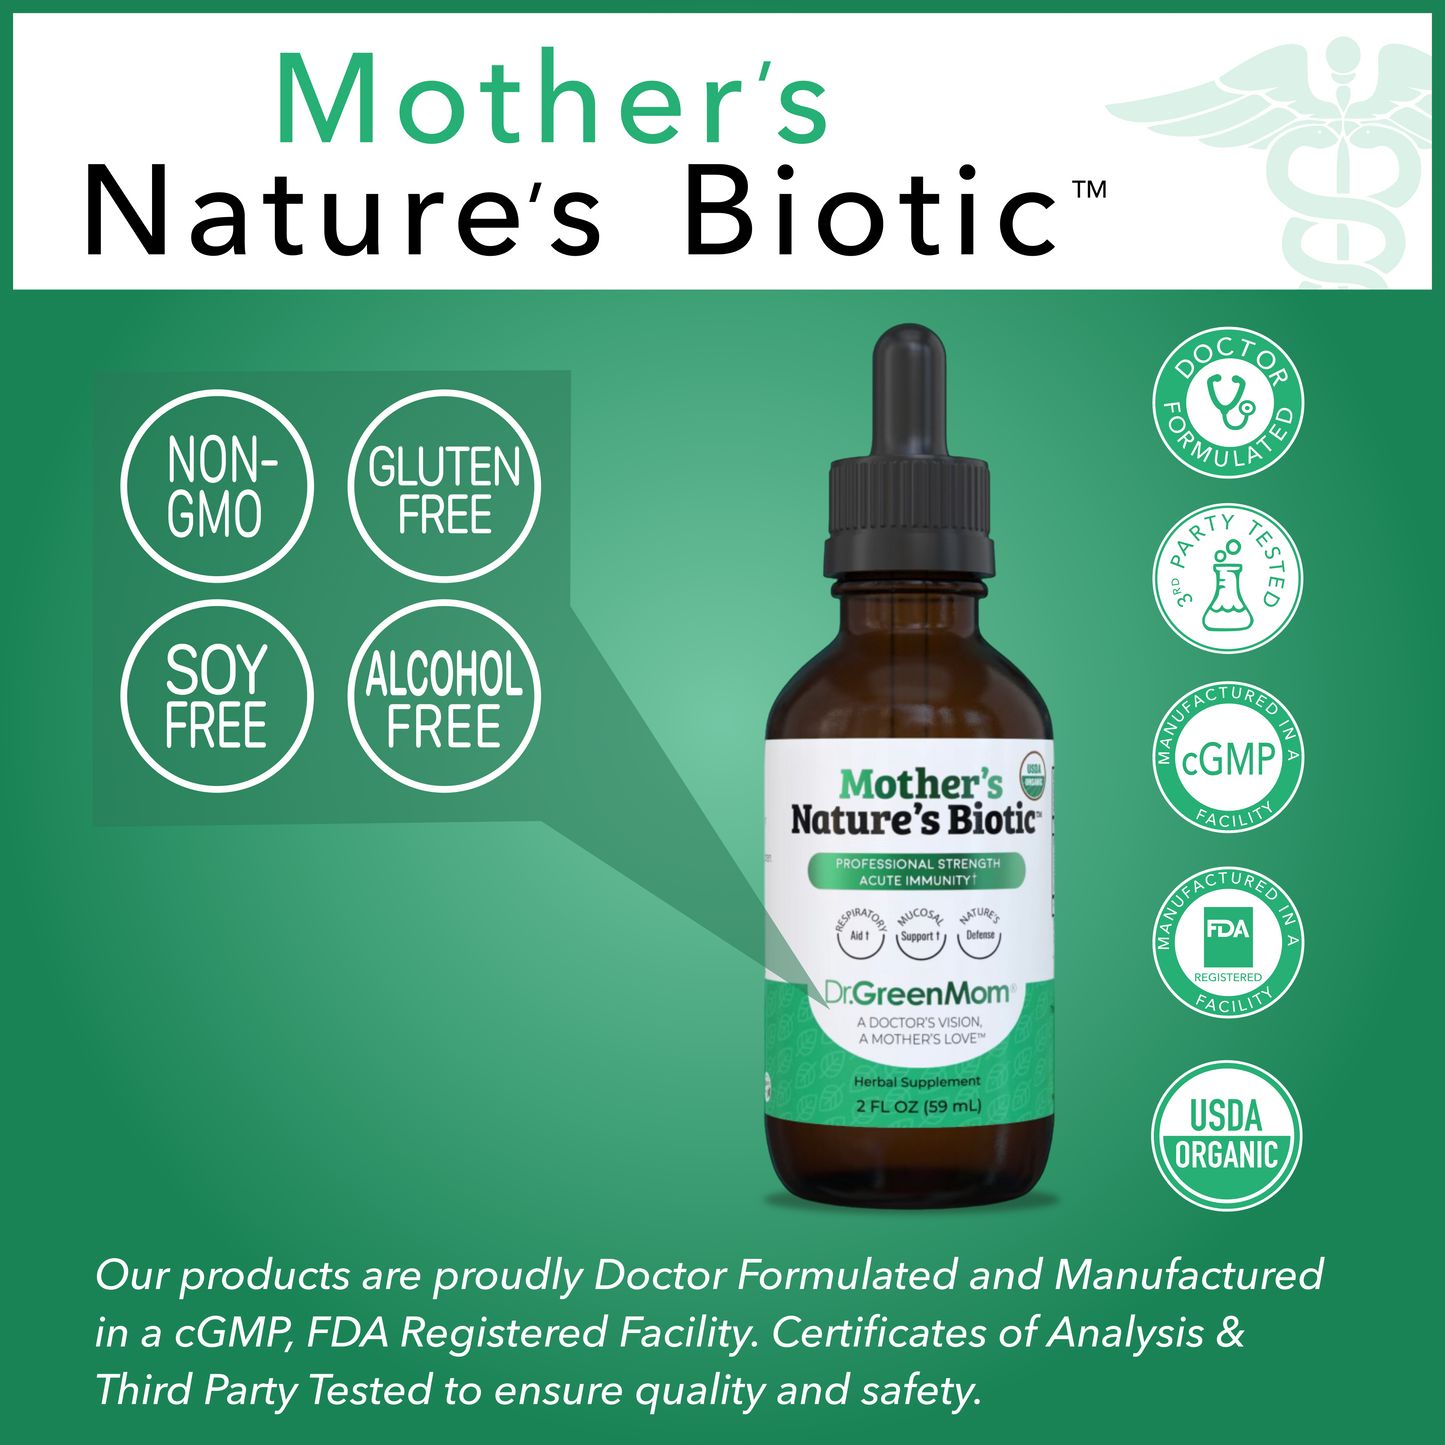 Mother's Nature's Biotic™